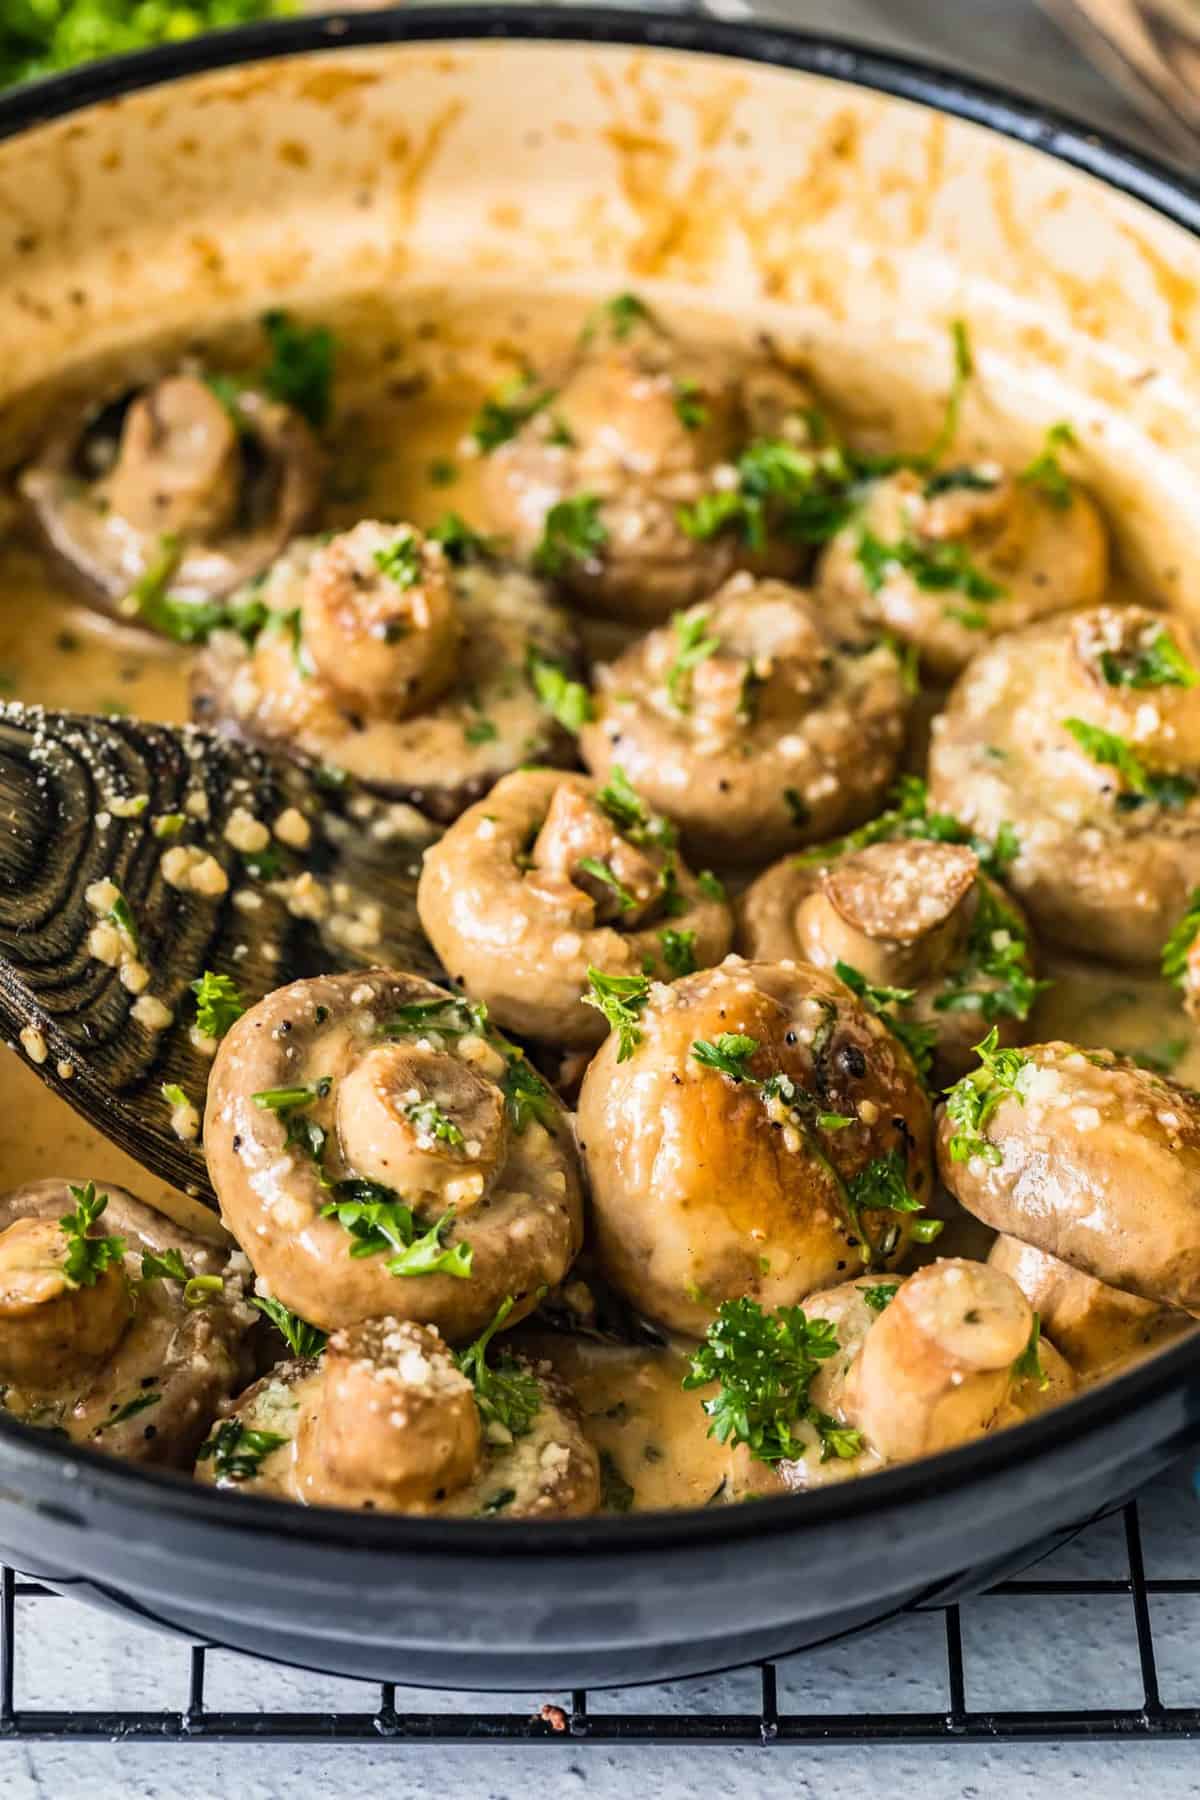 Creamy garlic mushrooms cooking in a skillet